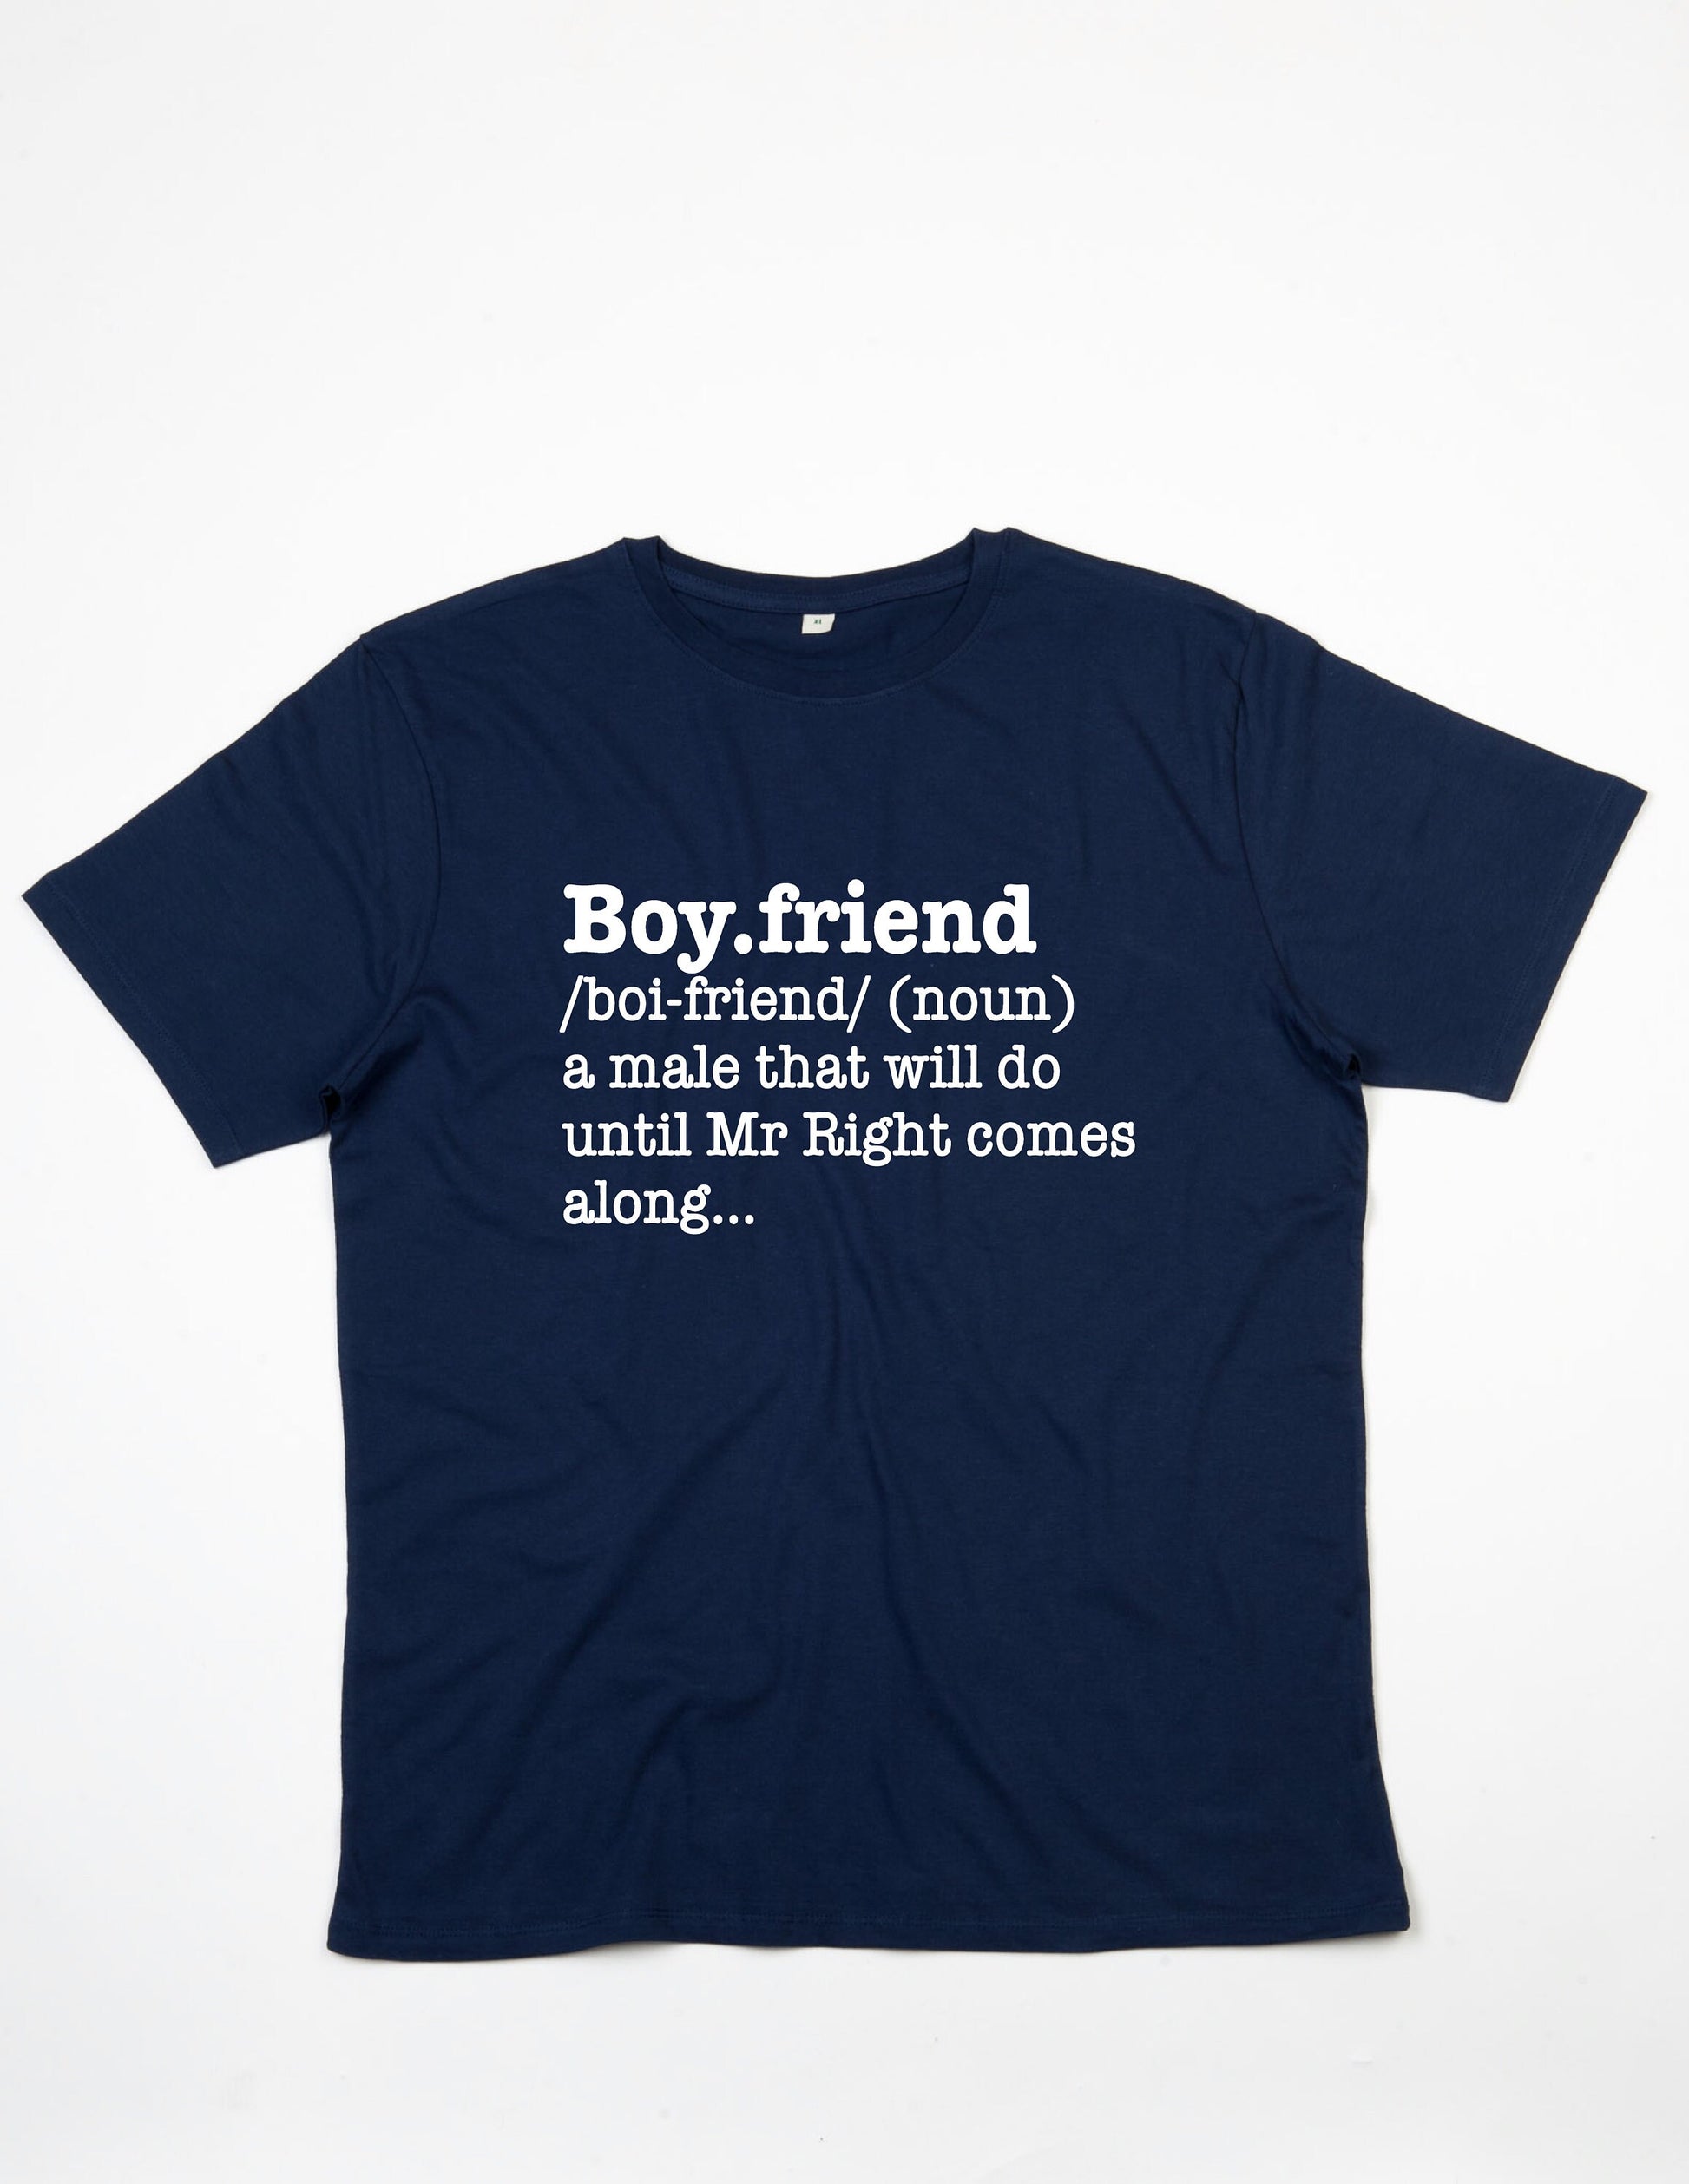 Personalised Boyfriend definition Shirt for Men, boyfriend funny birthday gift for him, boyfriend anniversary valentines day gift